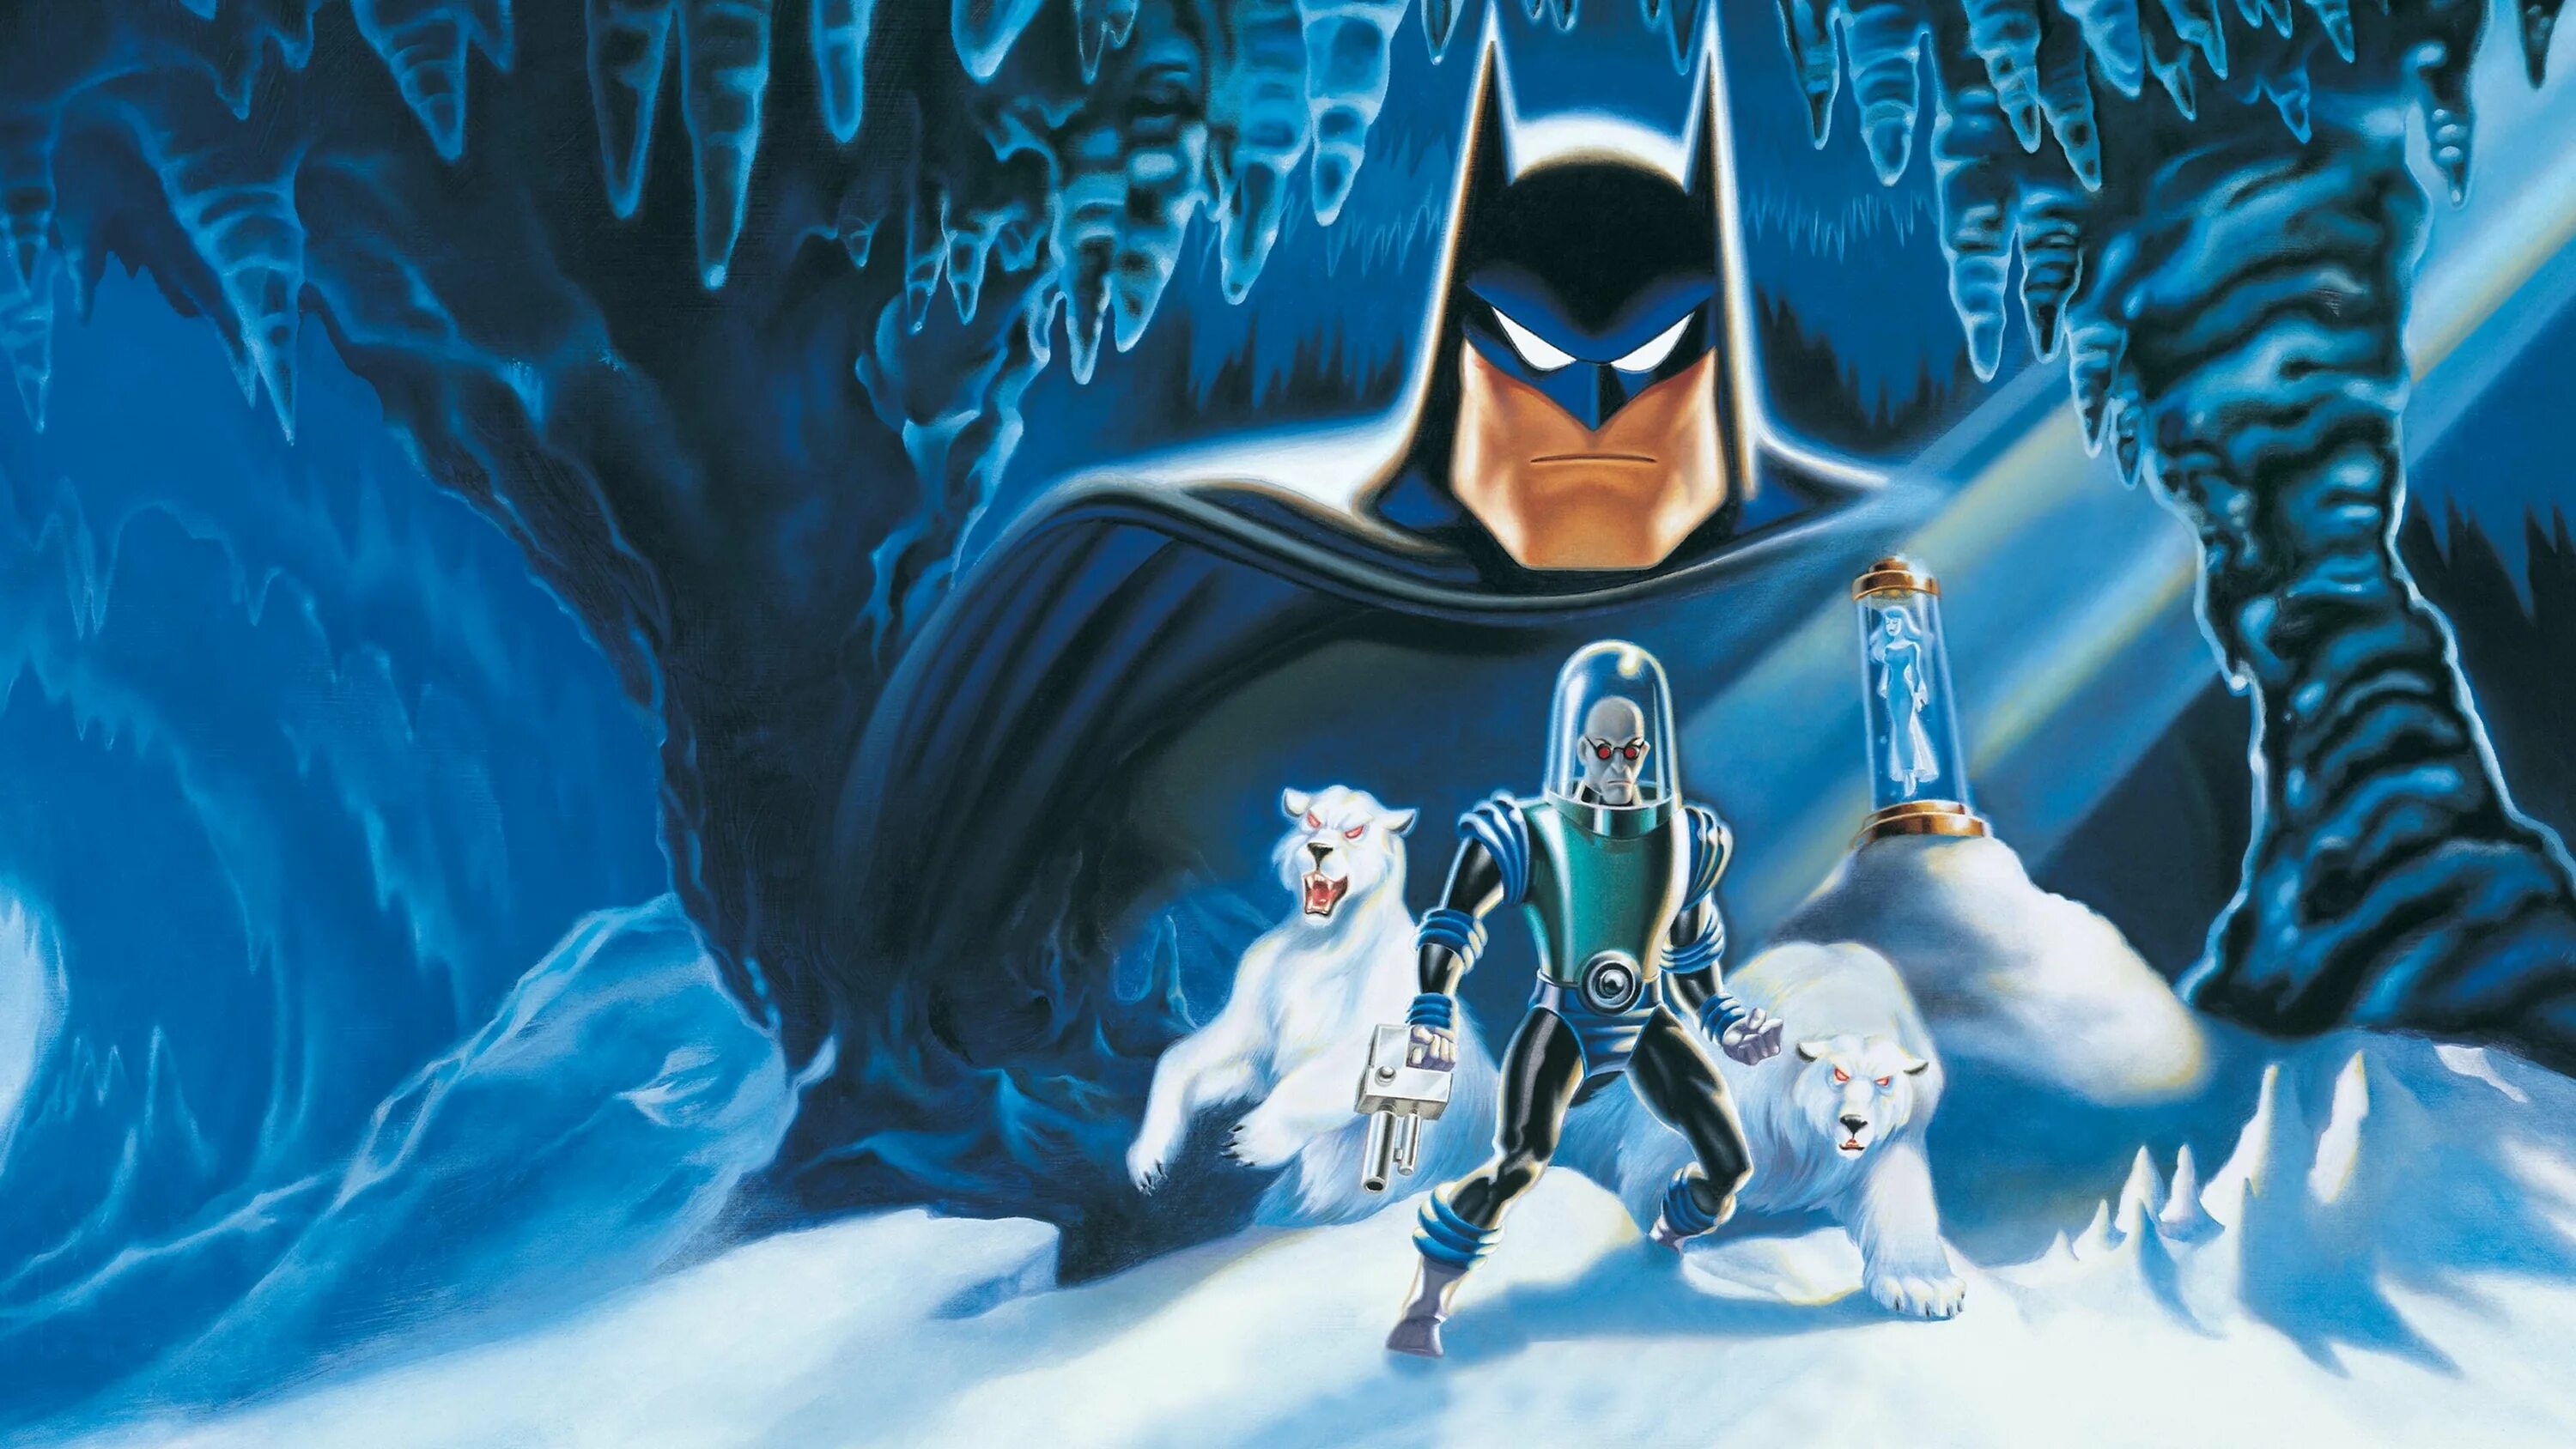 Batman фриз. Бэтмэн и Мистер фриз (1998). Бэтмен 1992 Мистер фриз. Мистер фриз Бэтмен.